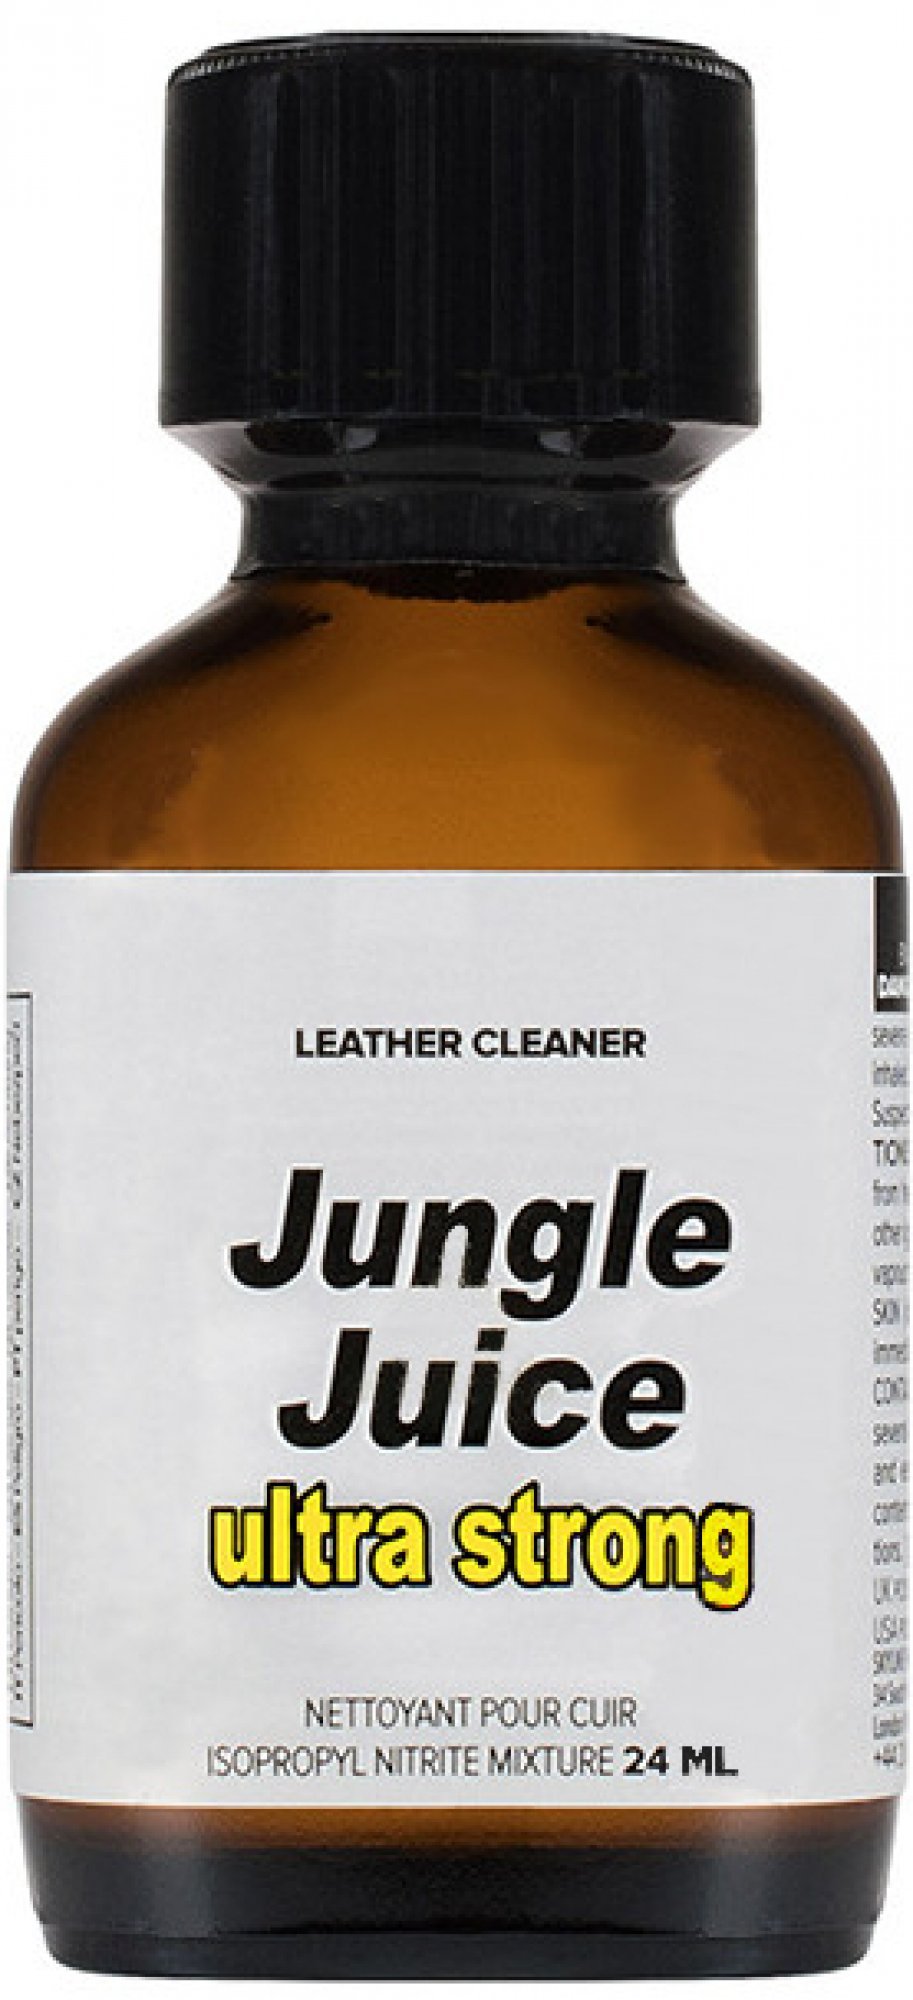 jungle juice ultra strong